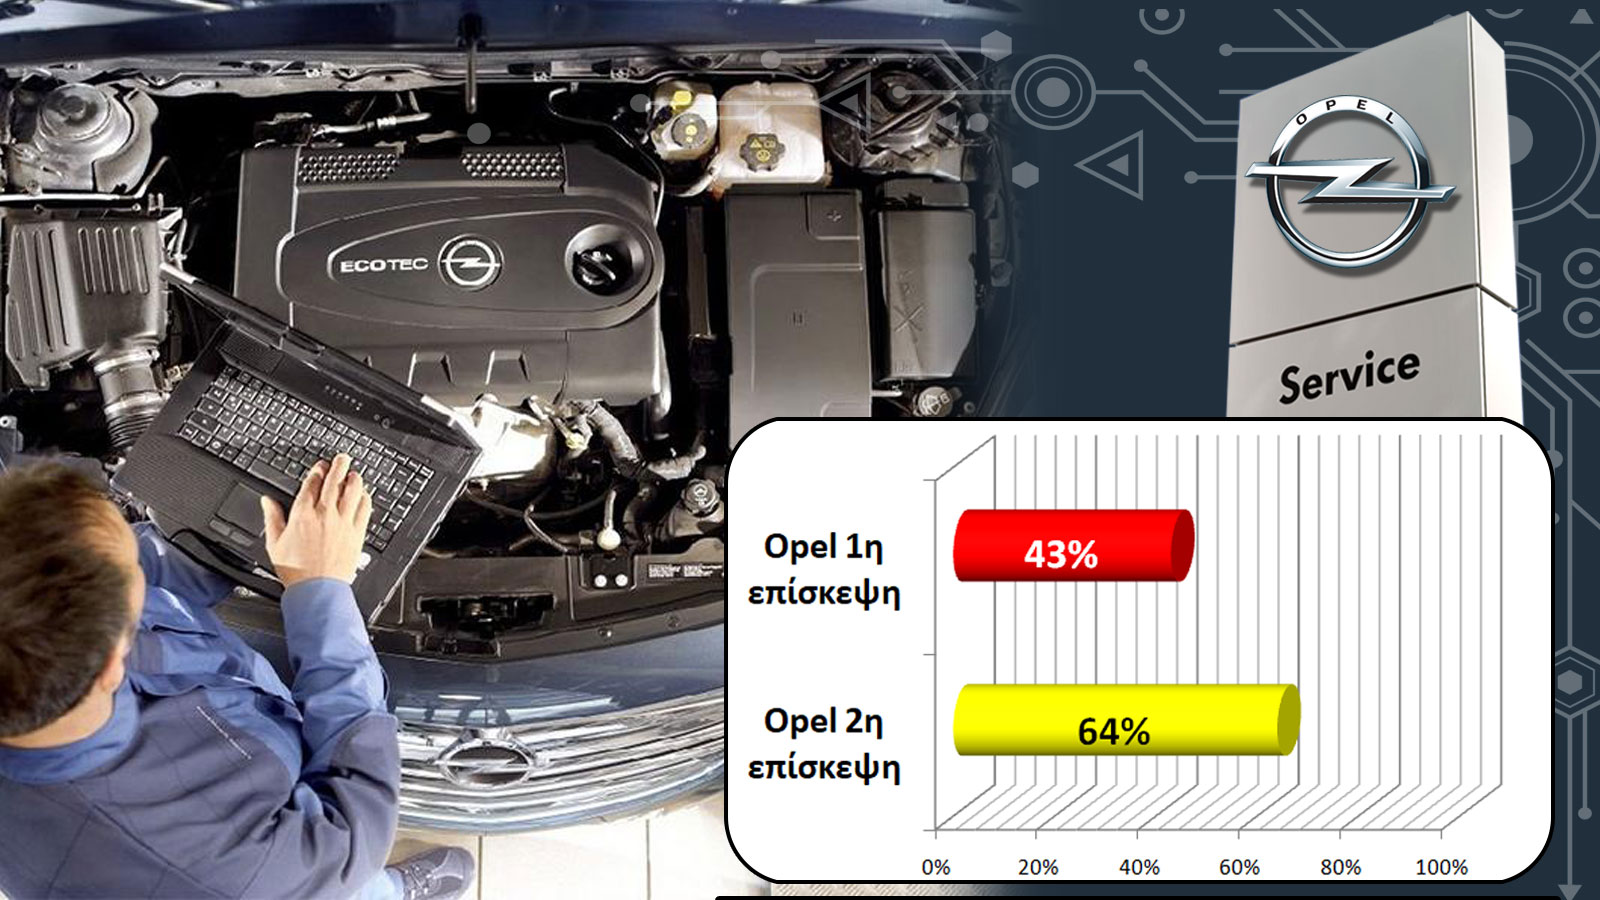 Test Συνεργείων 2ος έλεγχος: Bελτίωση για την Opel